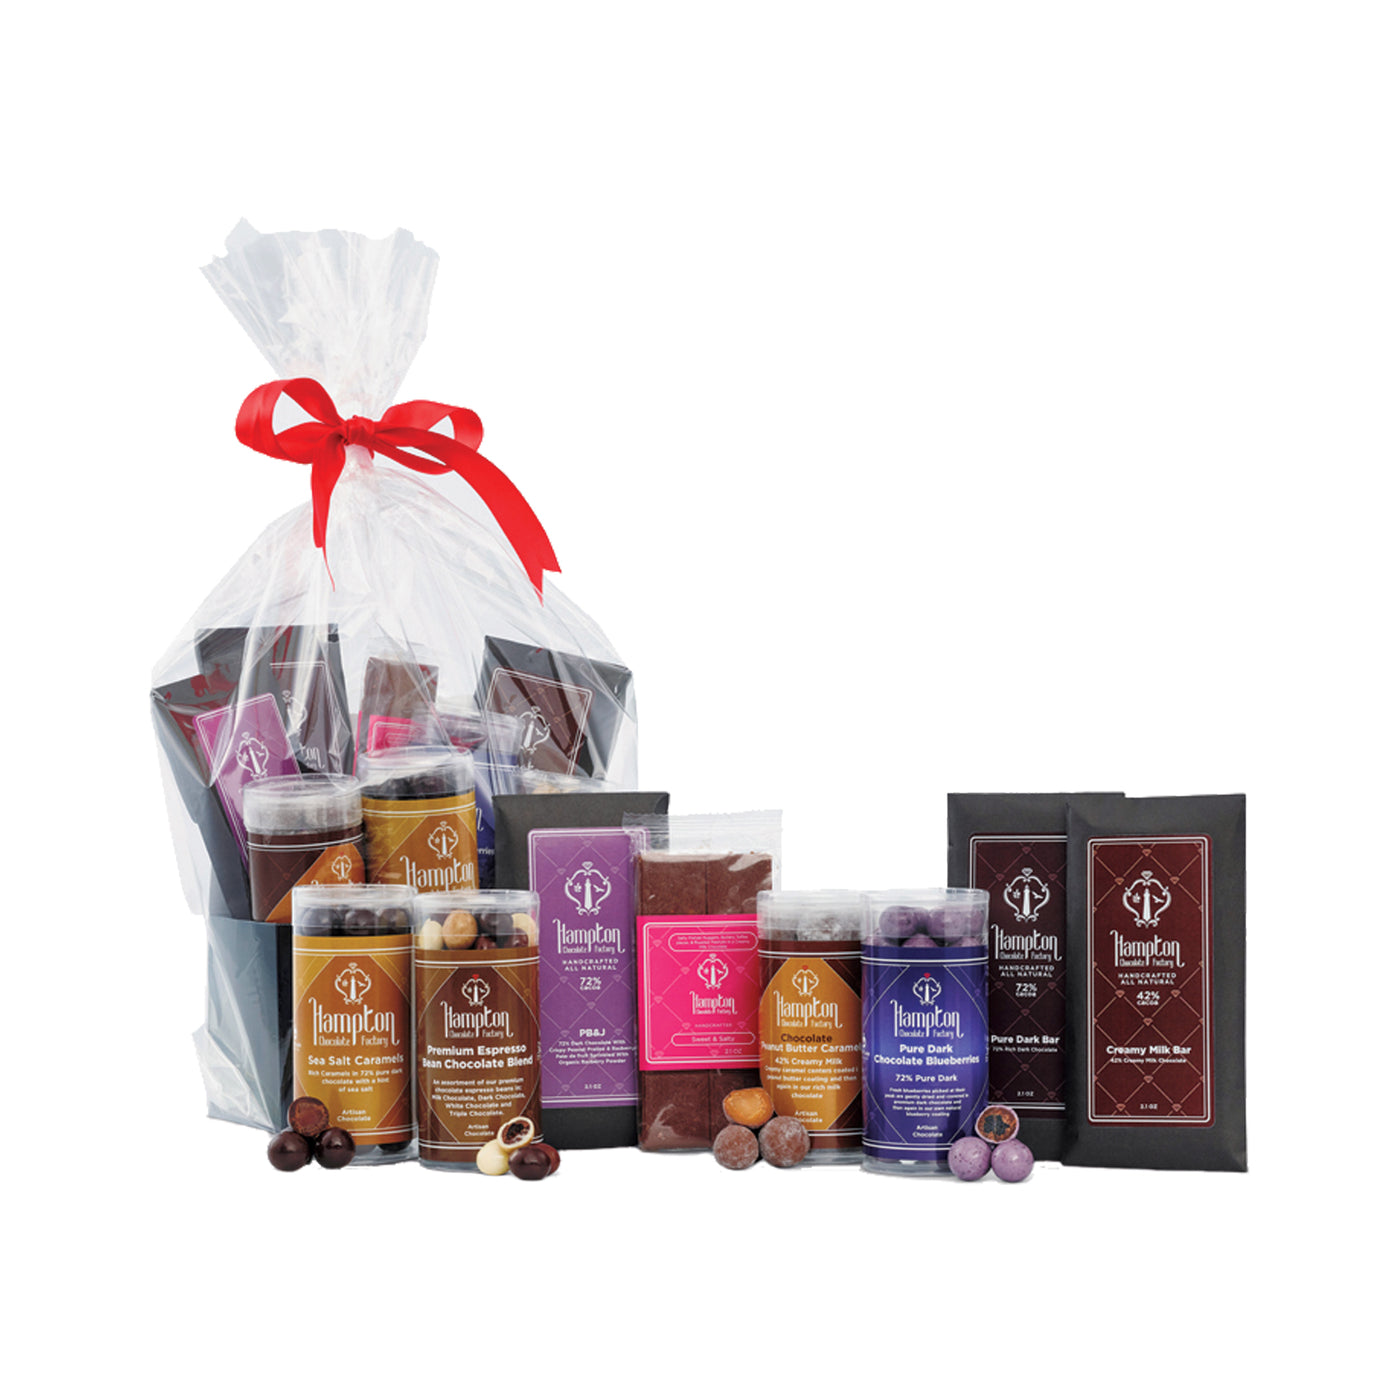 Chocolate Lovers Gift Basket | dark chocolate or milk chocolate